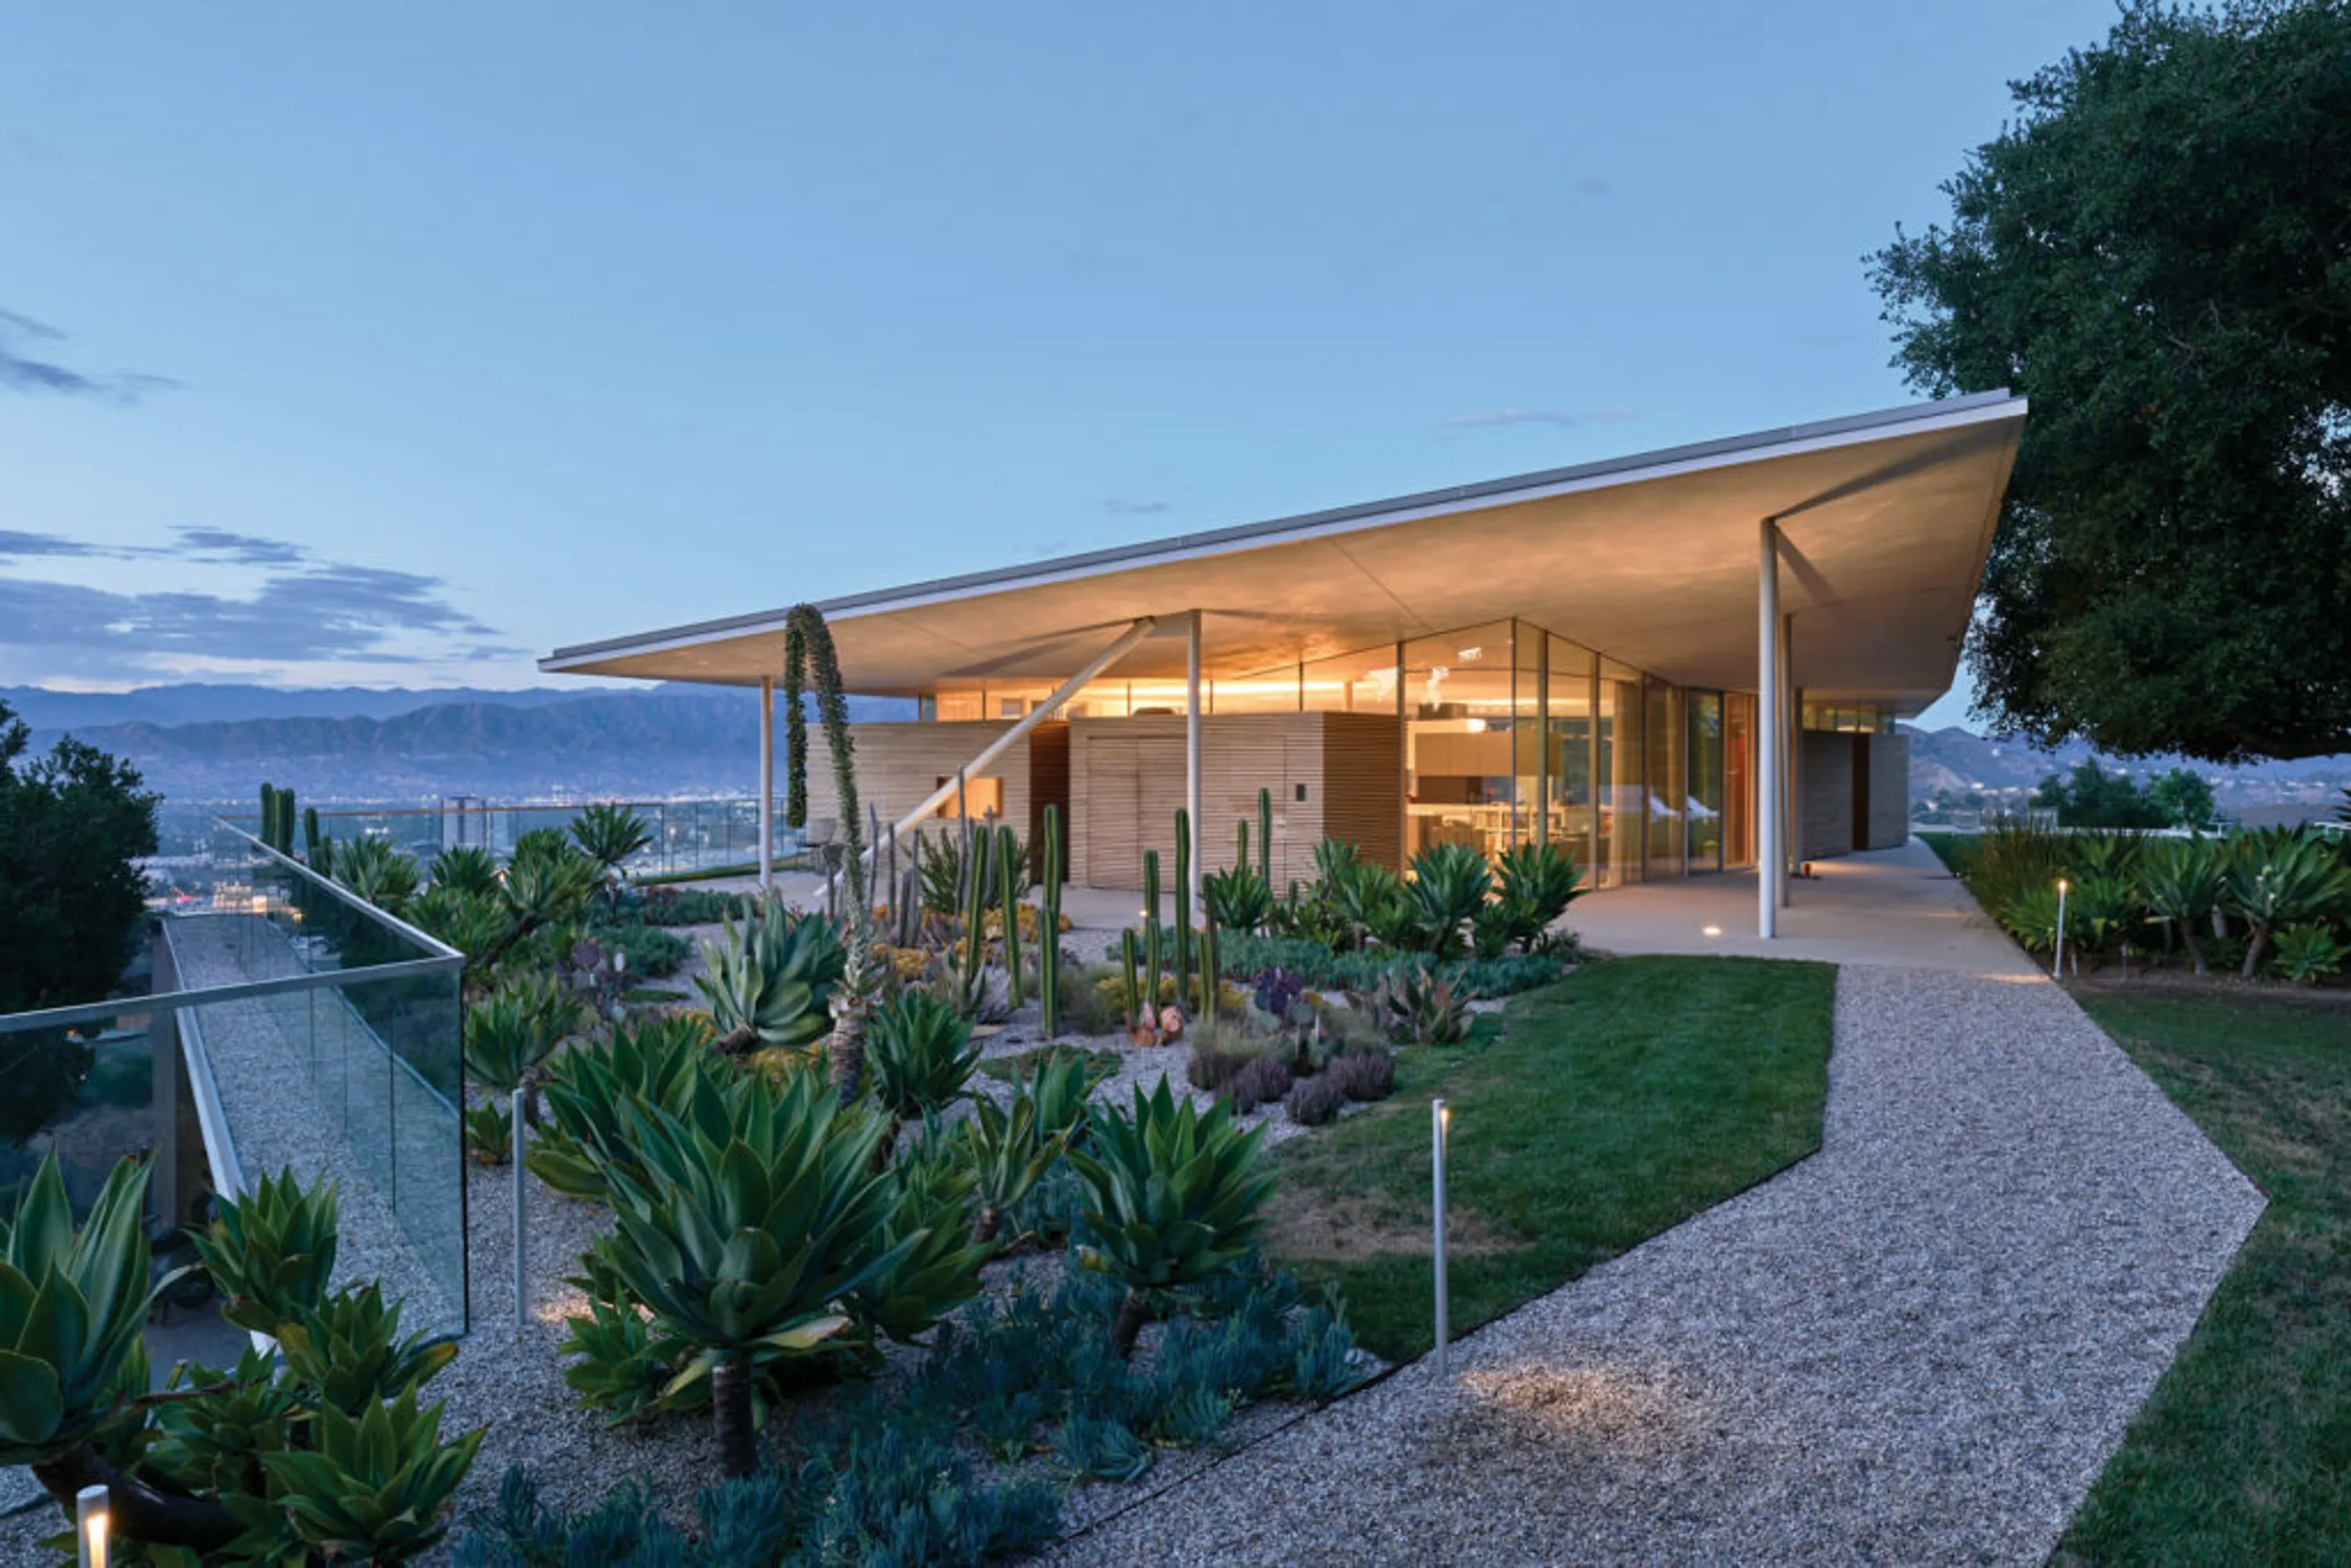 Hollywood hills gluck modernist home exterior waterwise garden 1024x683